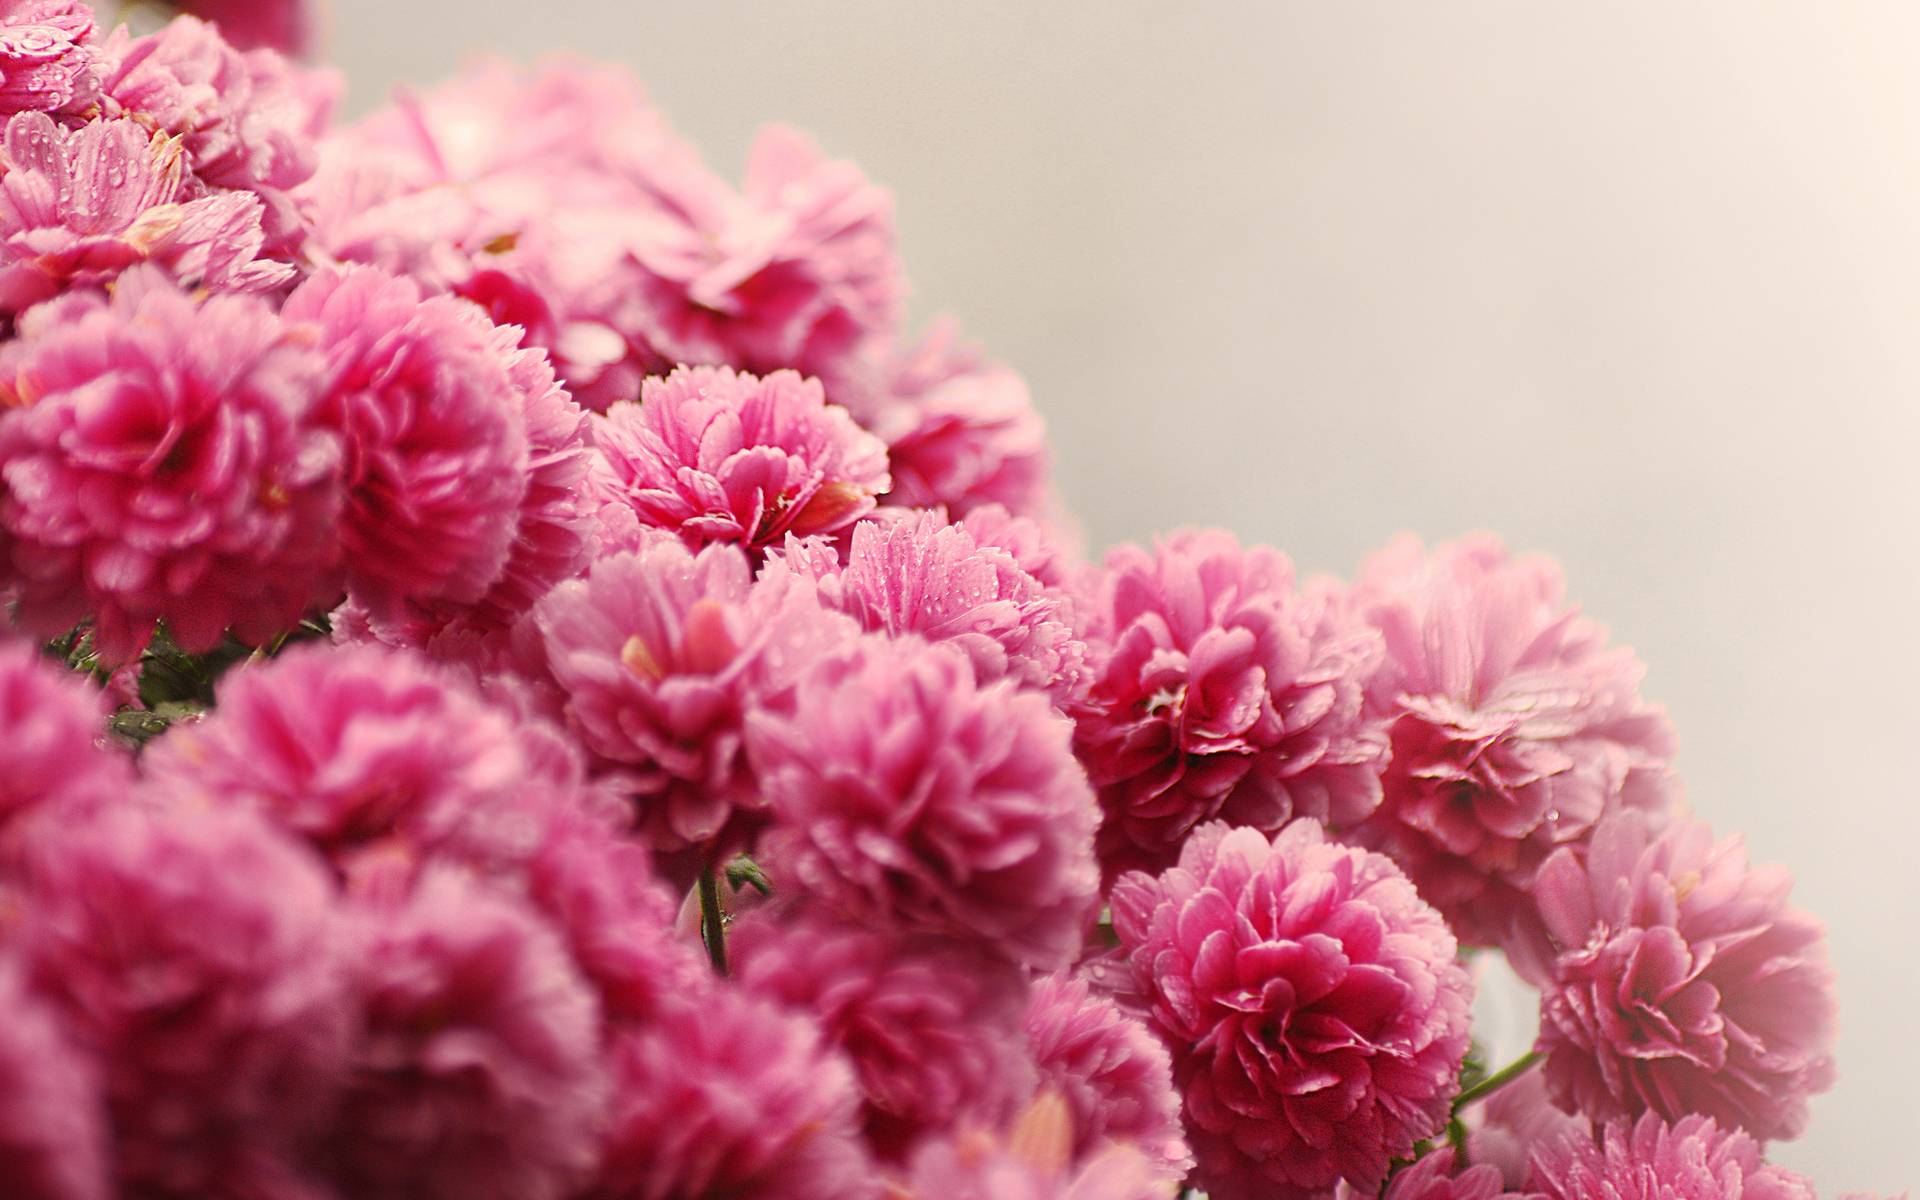 flowers, focus, rose, pink, drops, hd, wallpaper, beauty, background